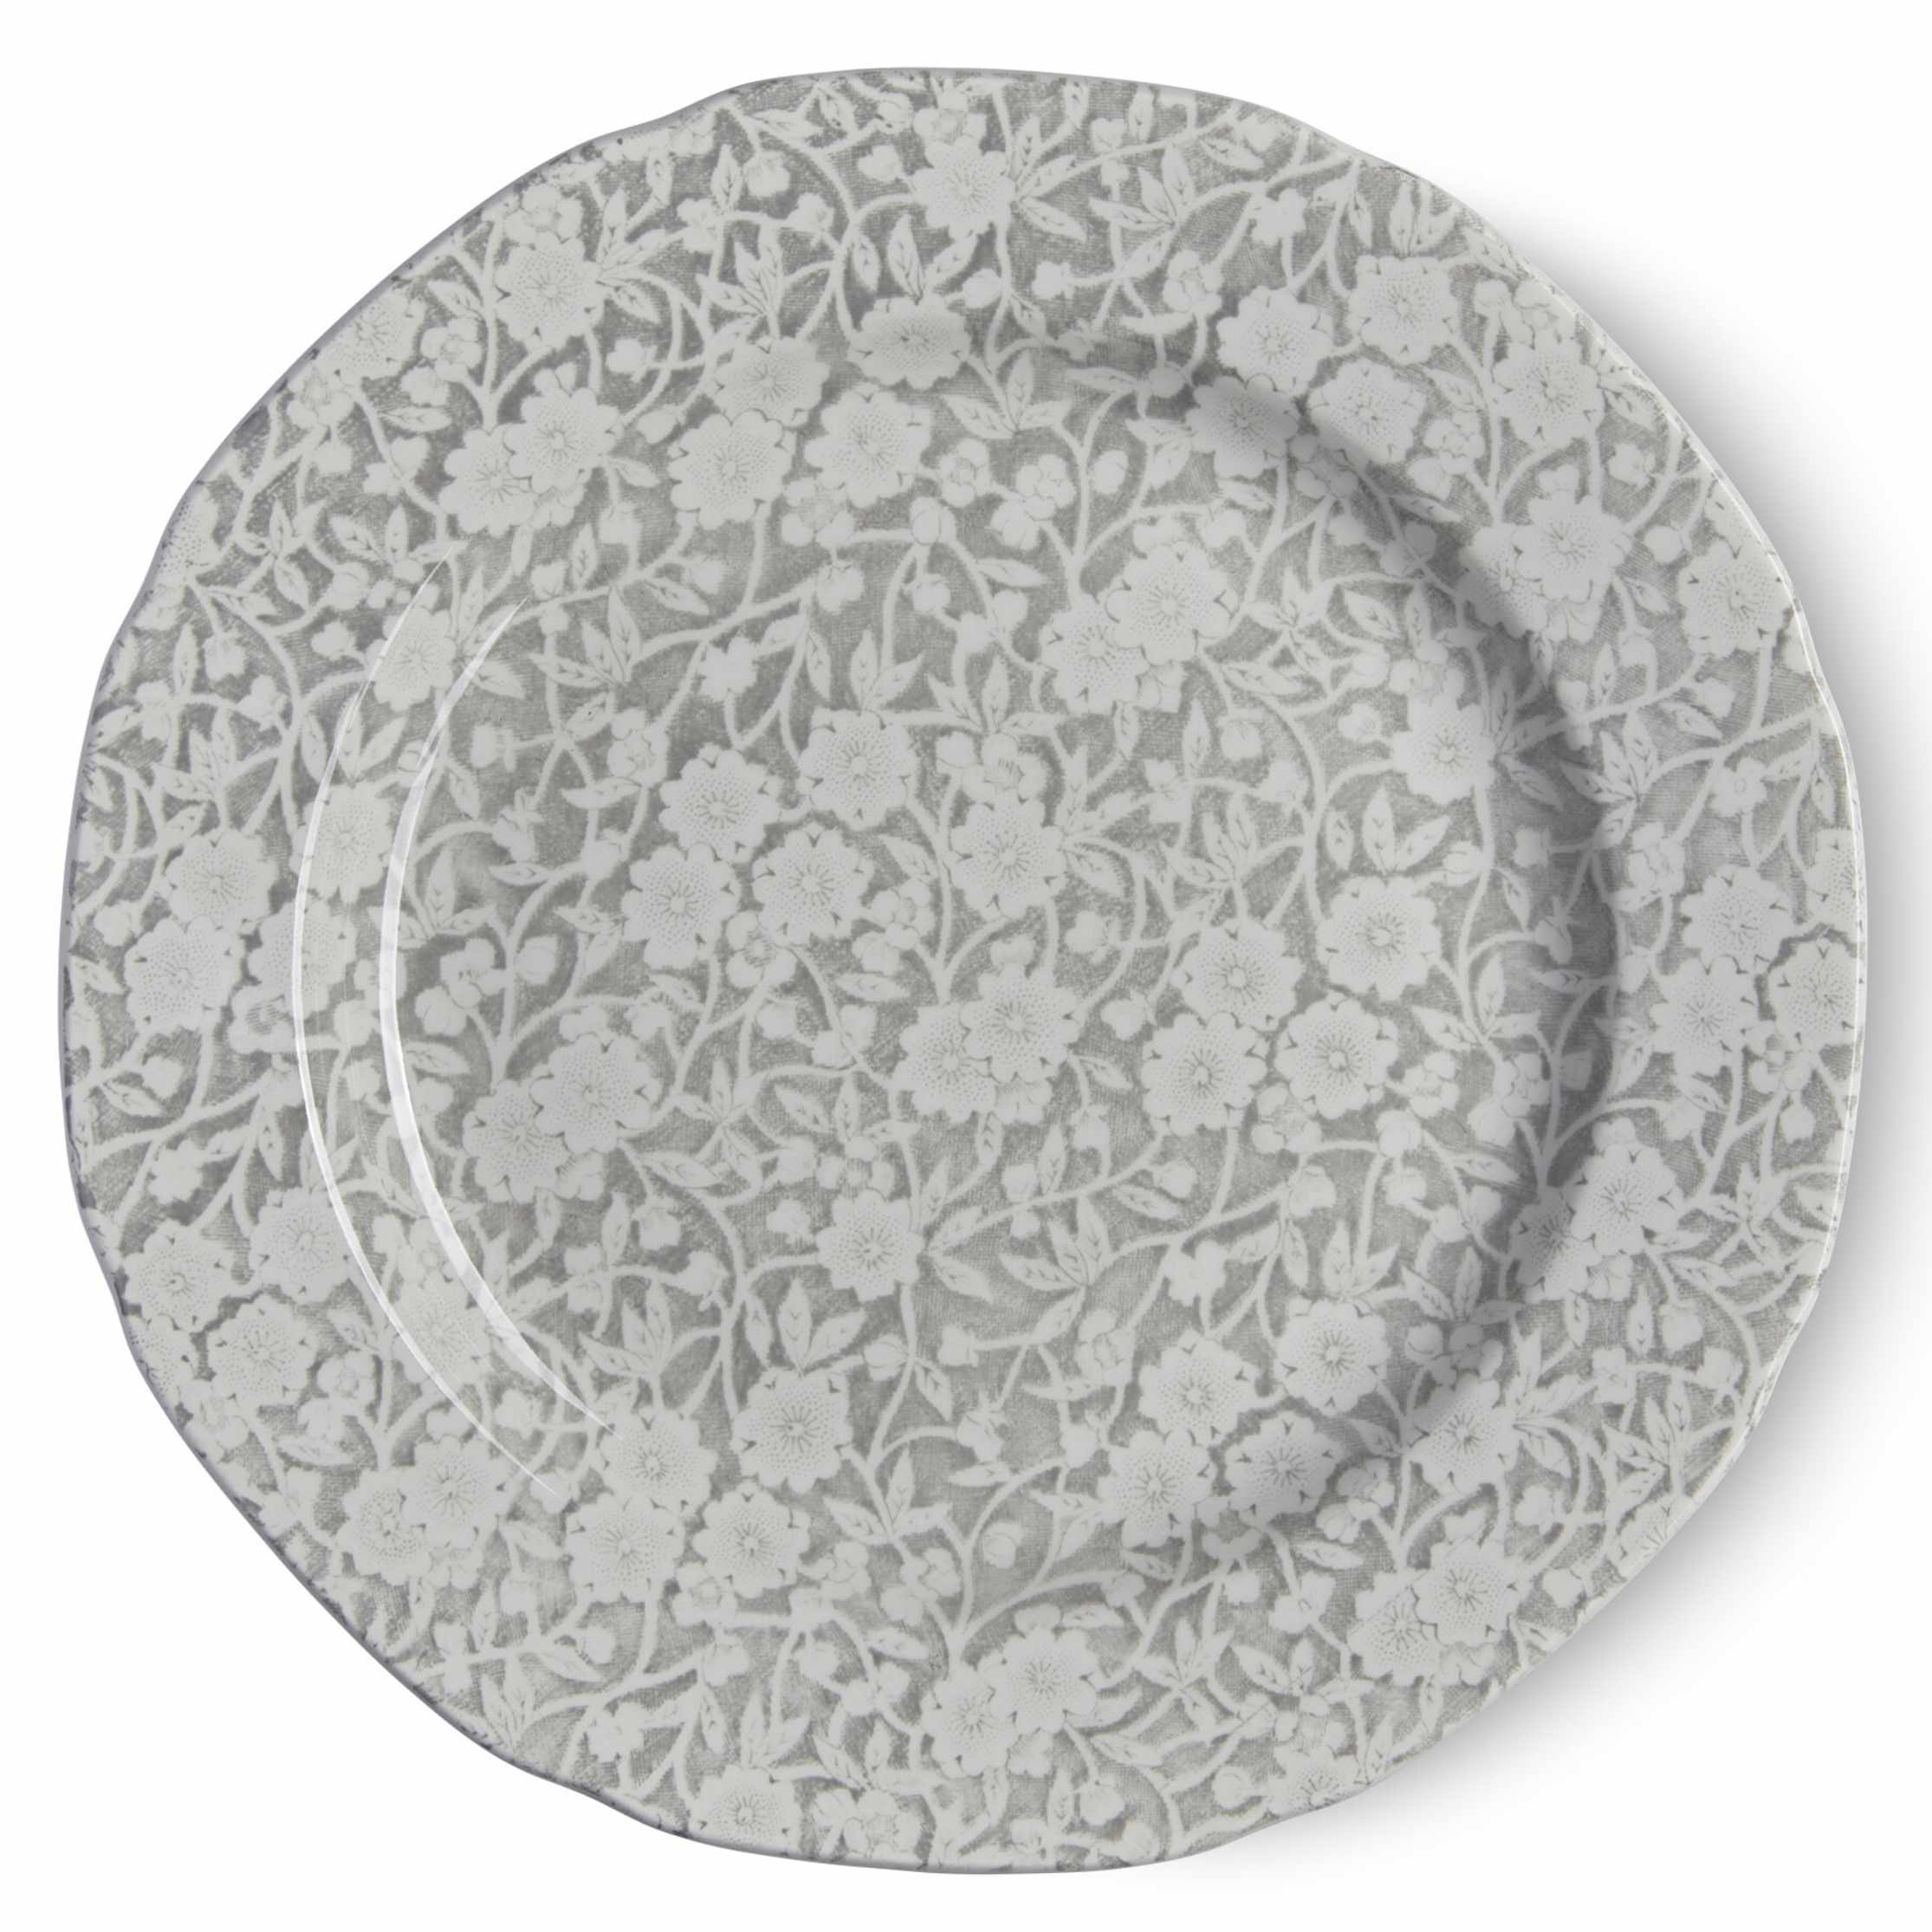 Dove Grey Calico Plate 21.5cm/8.5